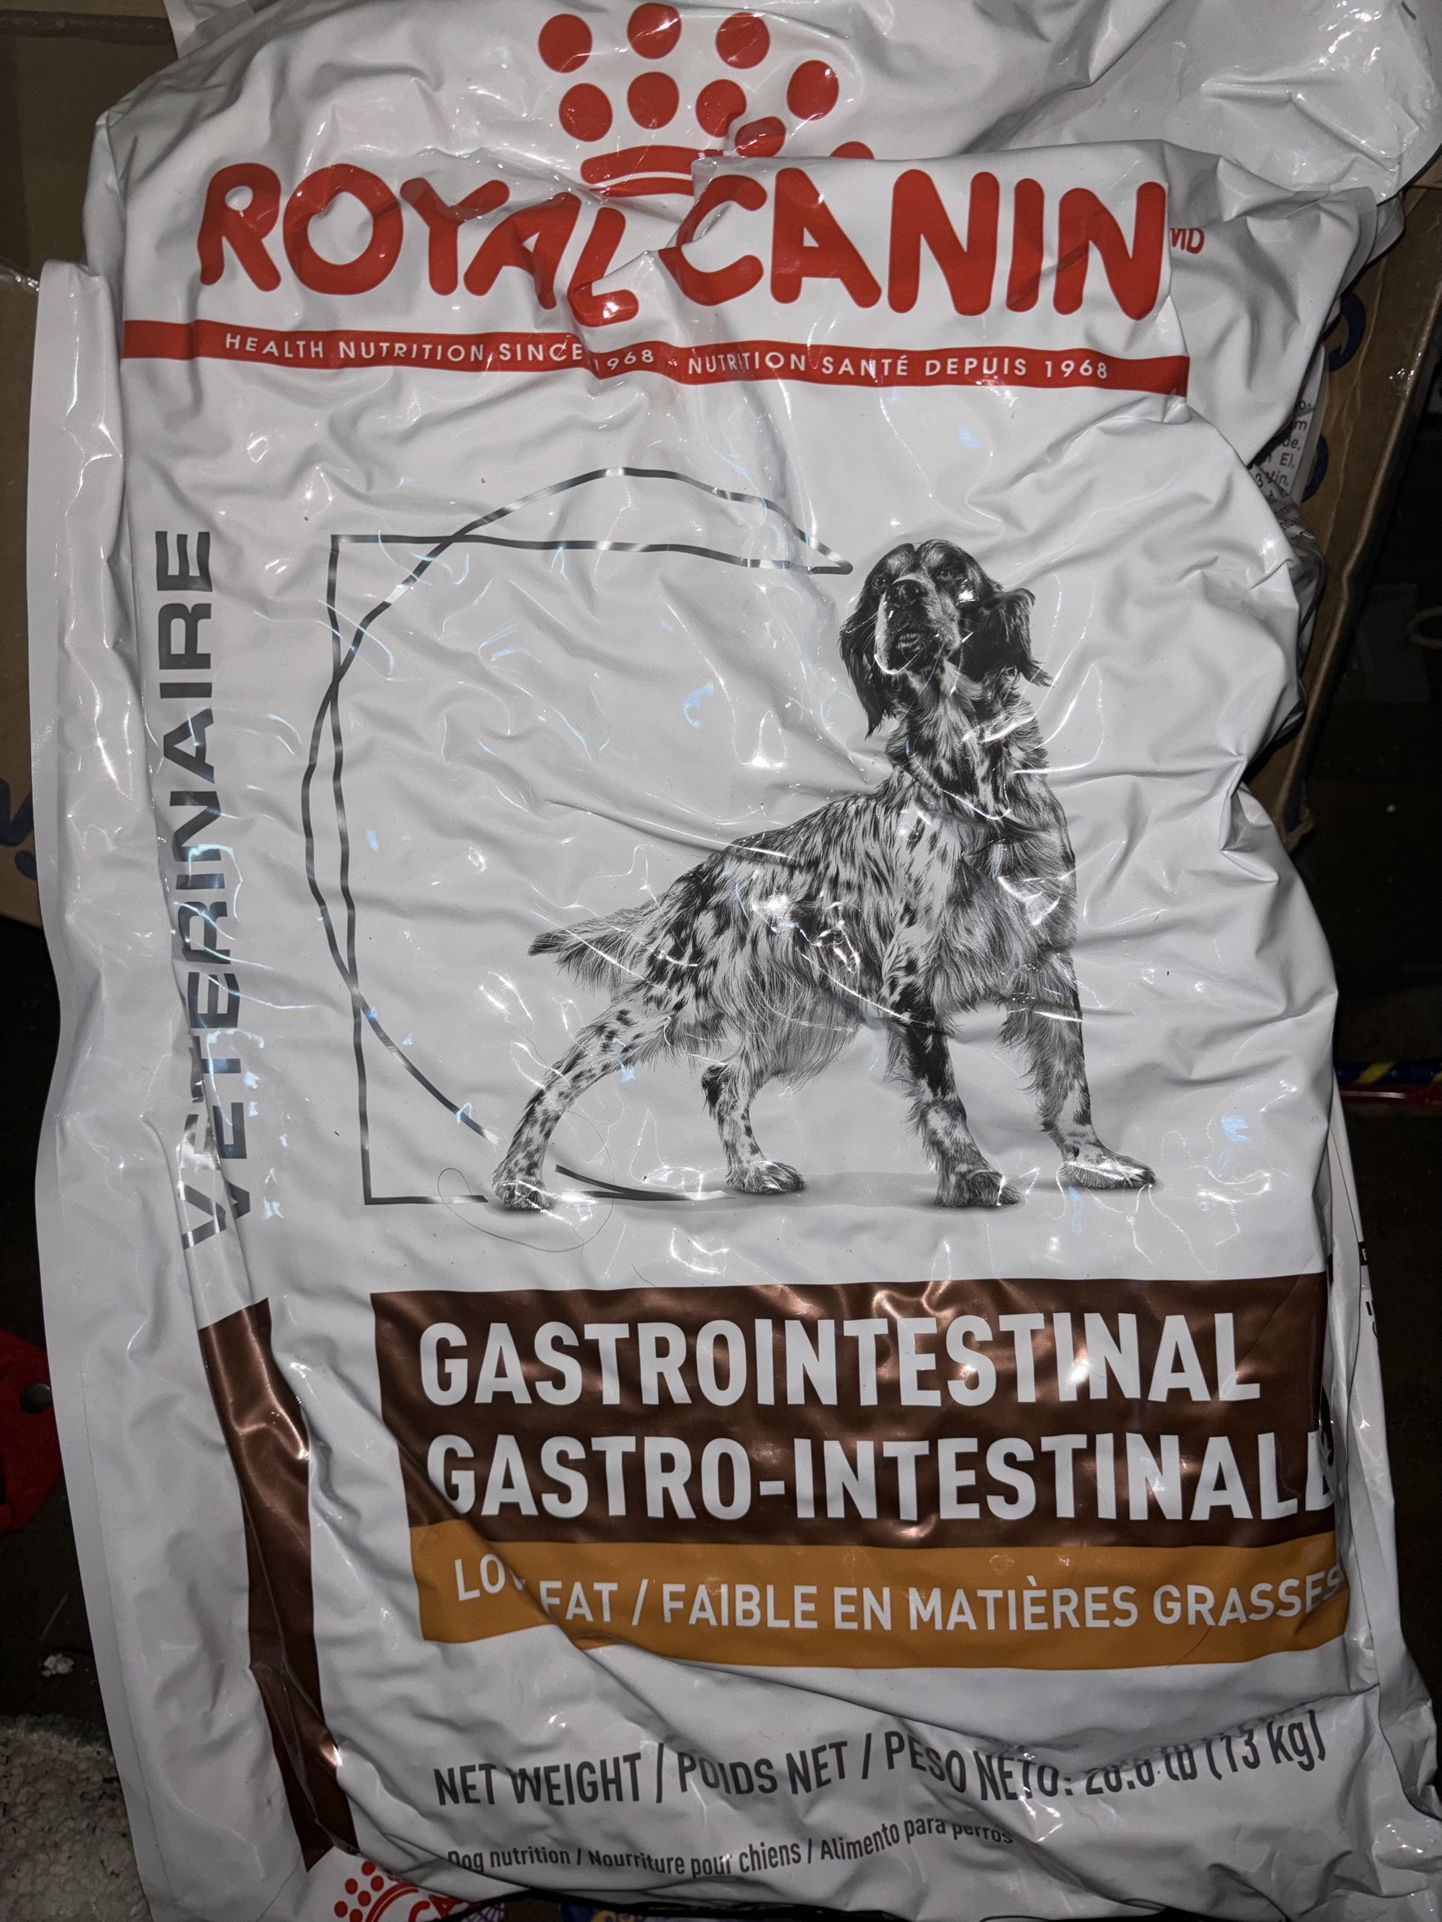 Royal Canin Dog Food 